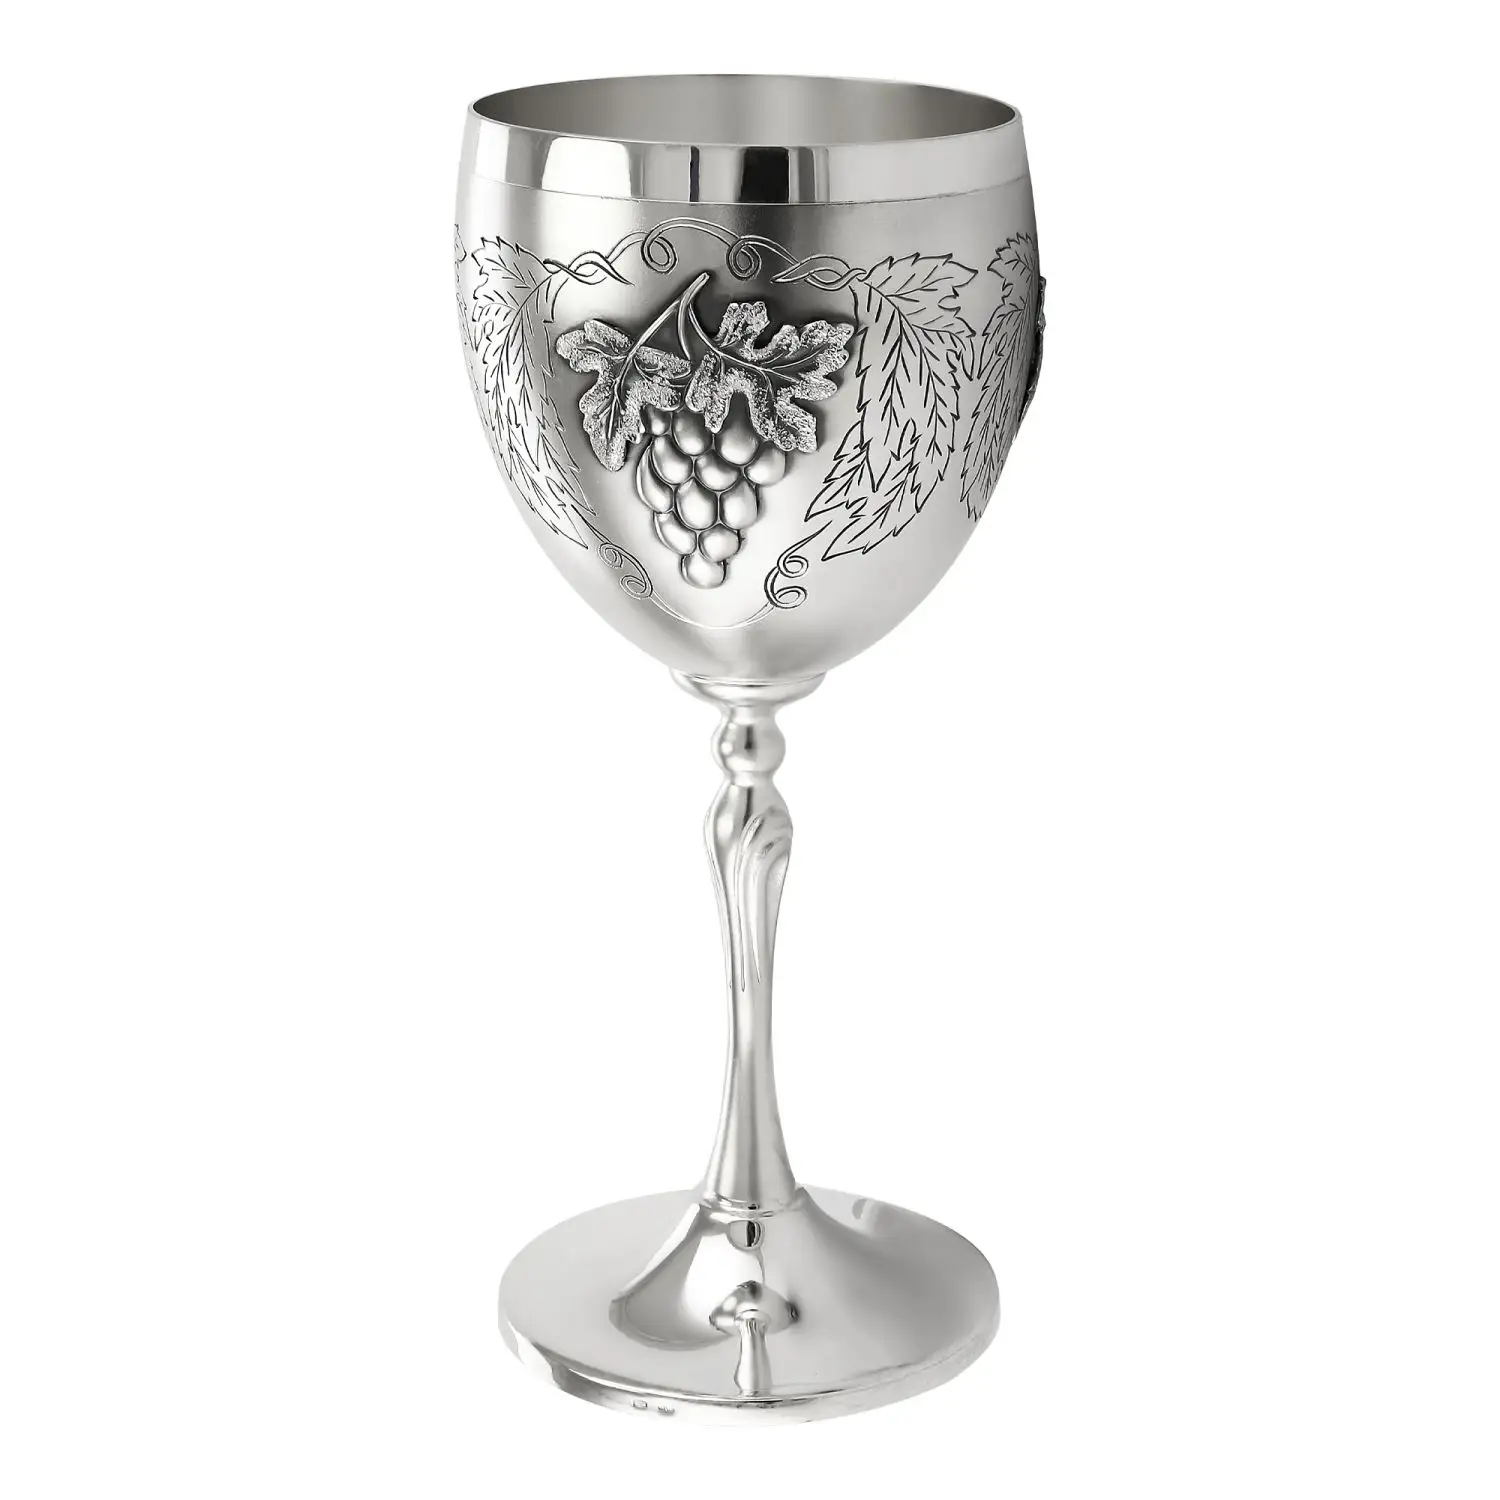 Бокал для белого вина Виноградная лоза (Серебро 925) бокал для коньяка виноградная лоза серебро 925